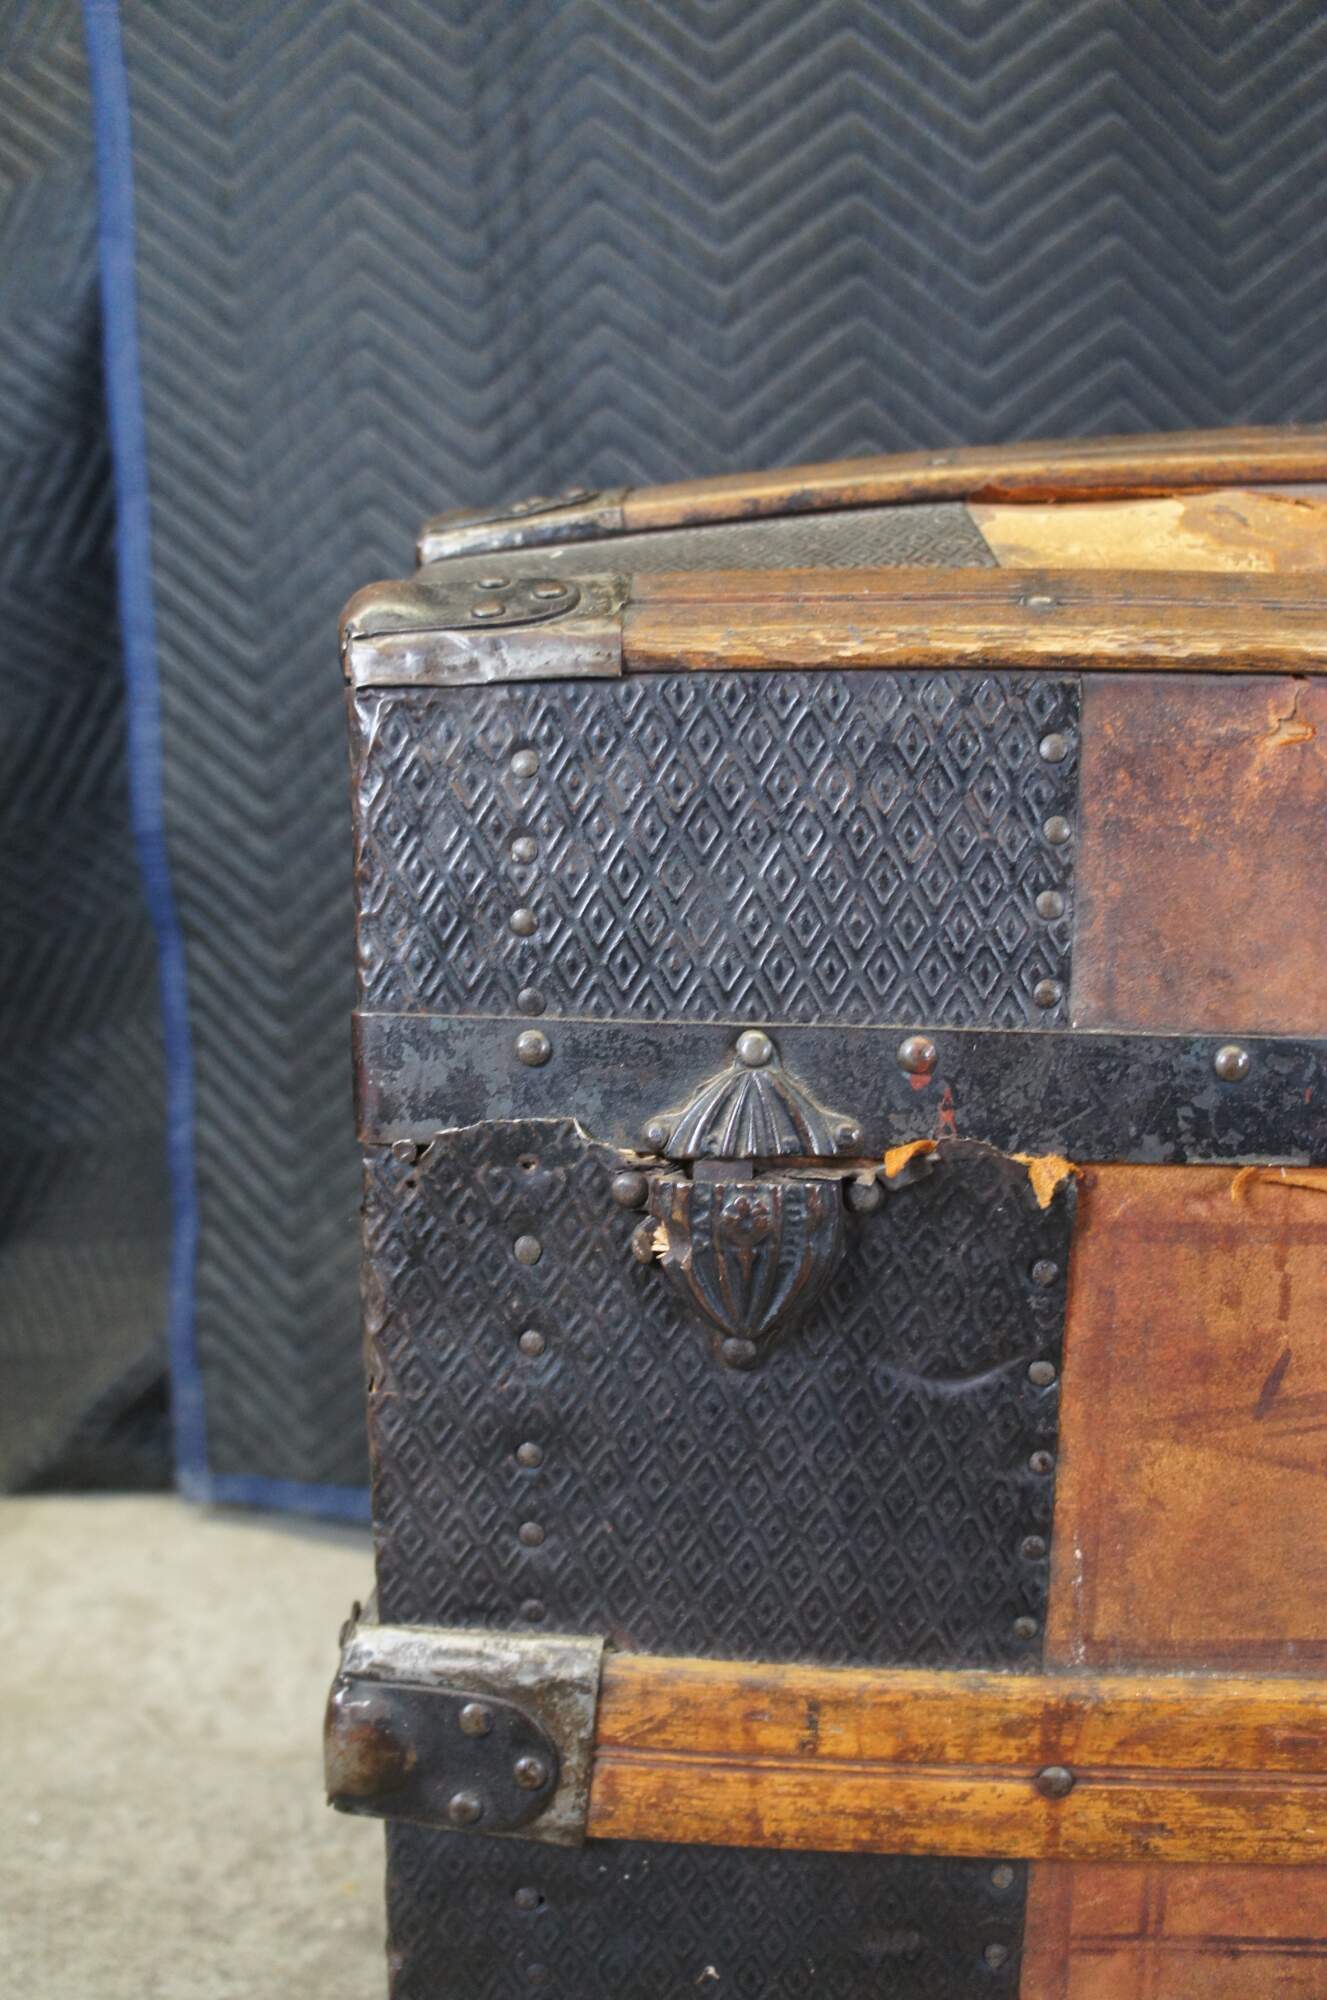 Antique Rauchbach-Goldsmith Co Everwear Steamer Trunk Luggage Coffee  Table 34